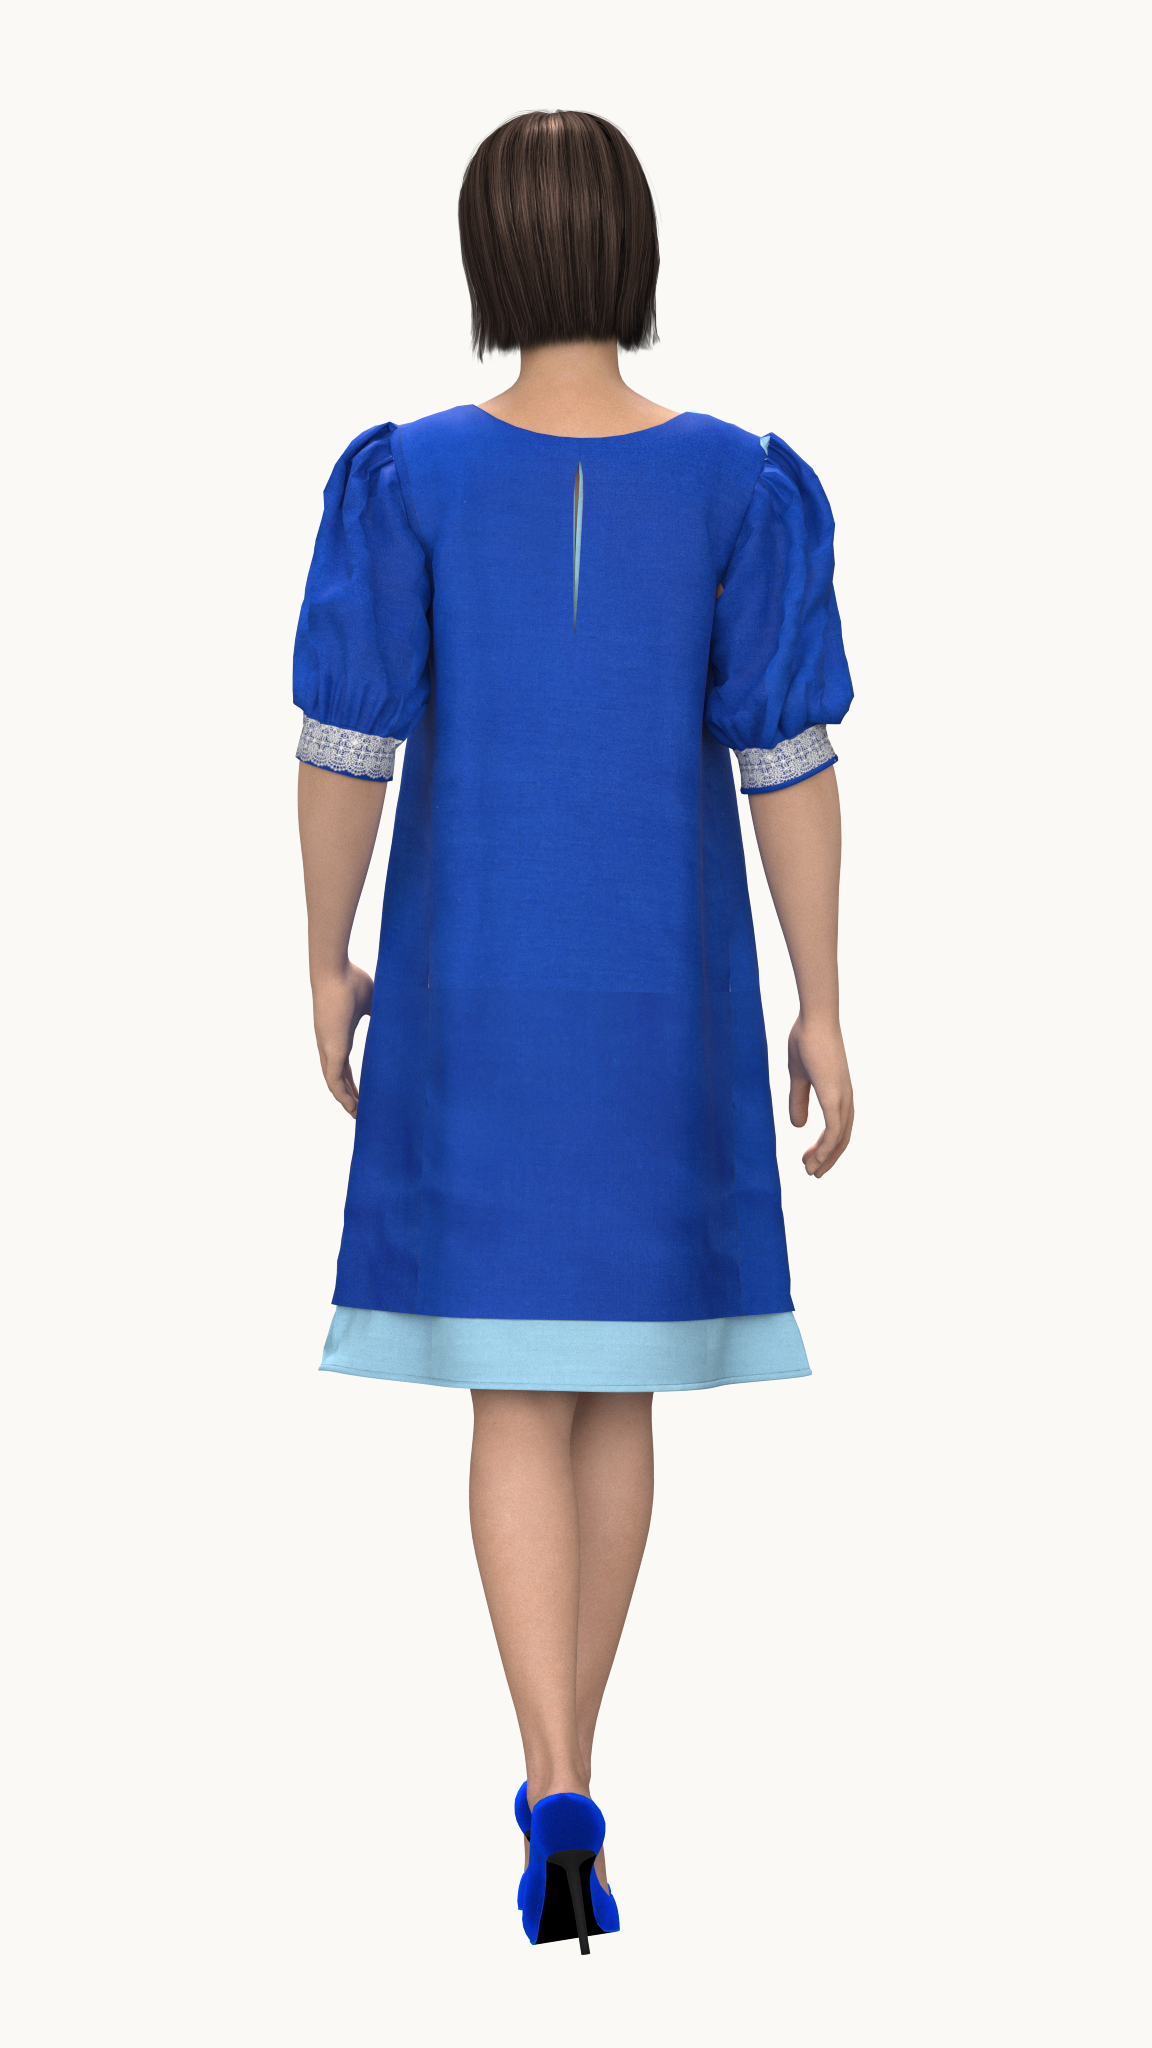 Over layered dress with lace yoke (blue)